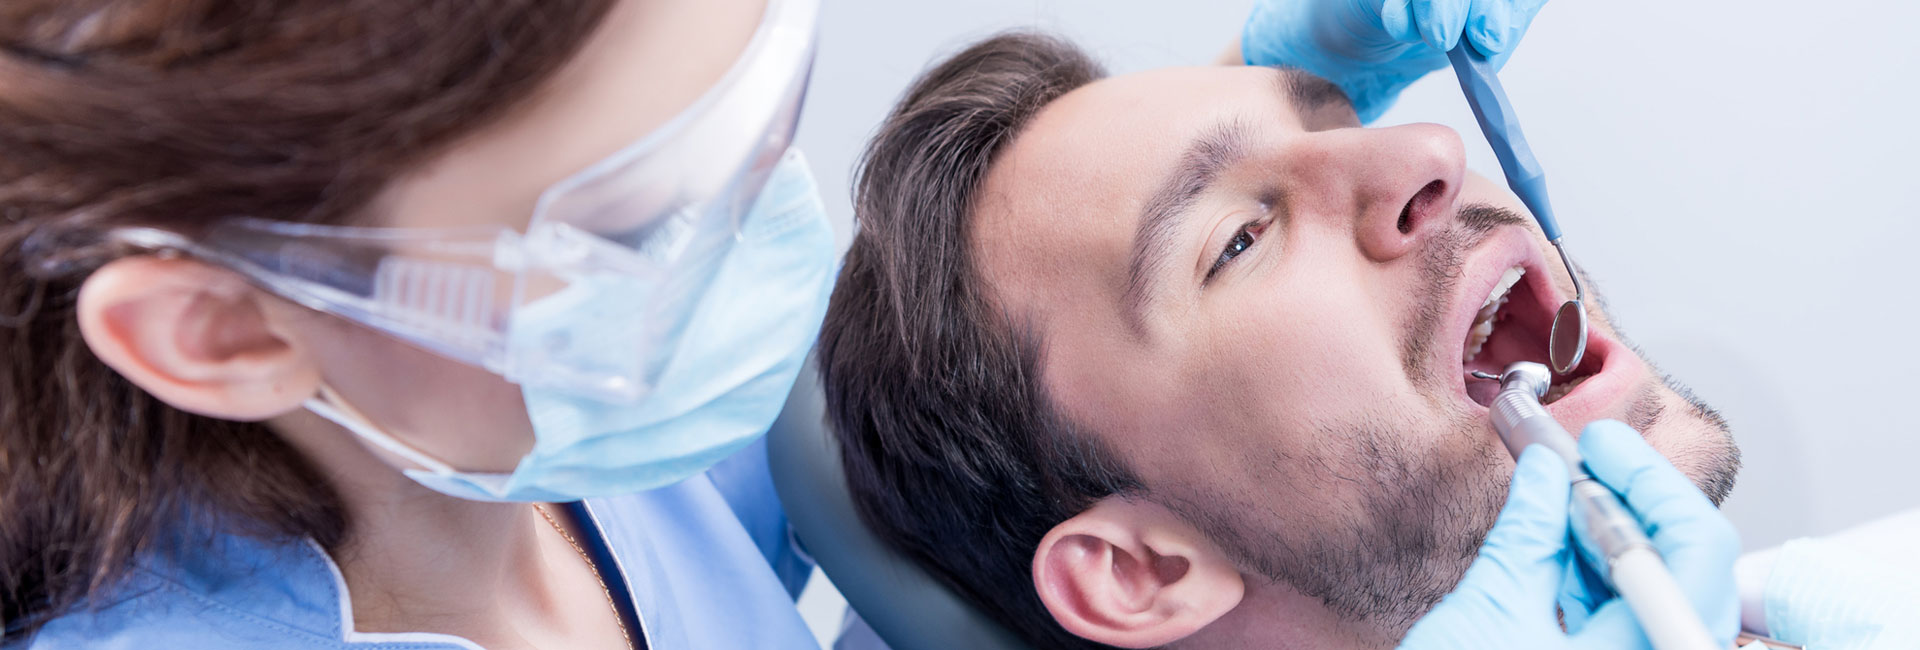 Dentist curing patients teeth